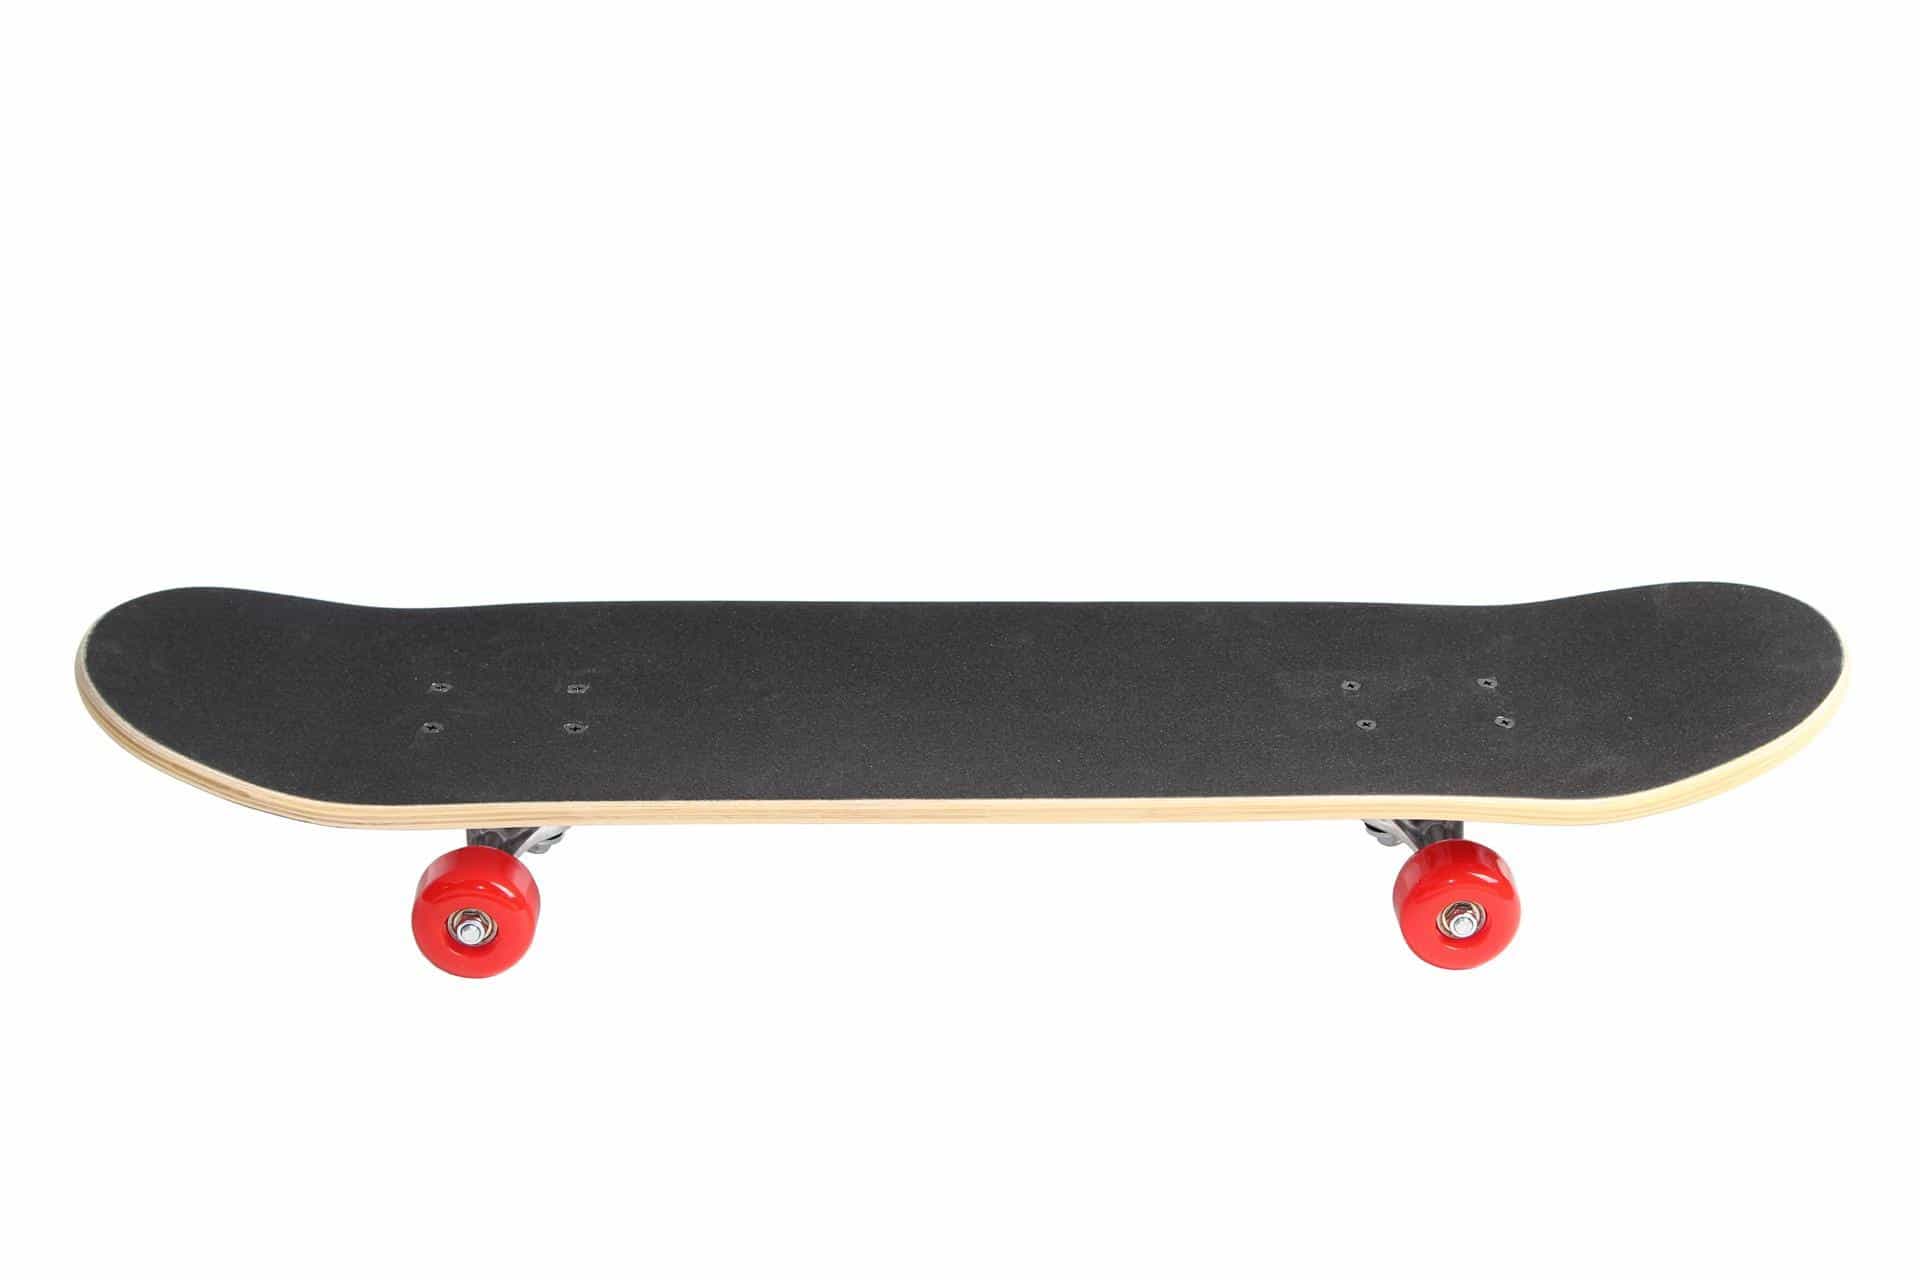 Laubr United States skateboard - 31 inch - Abec 5